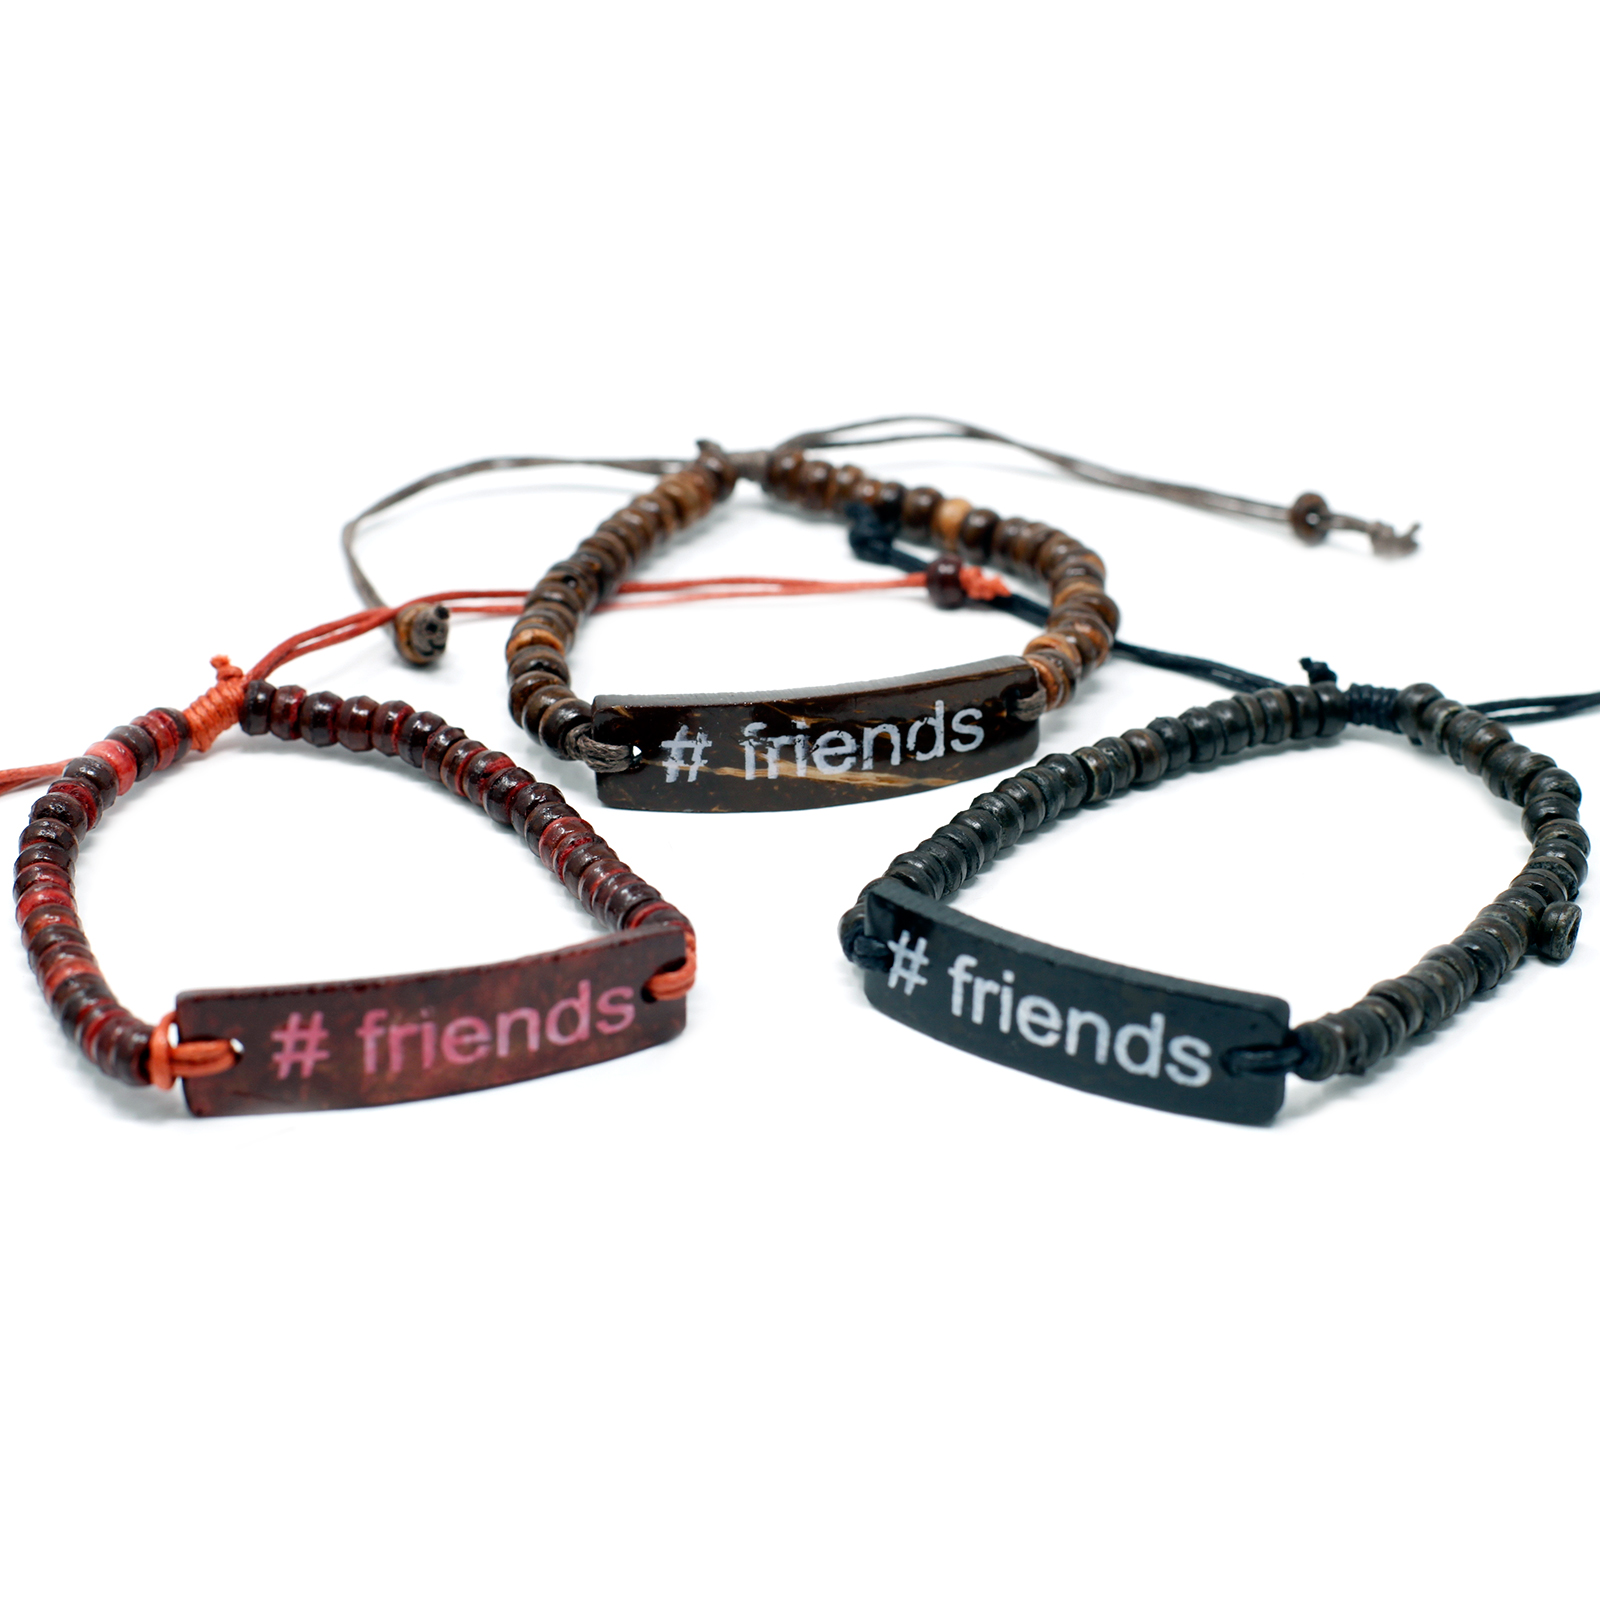 6 x Coco Slogan Bracelets - #Friends